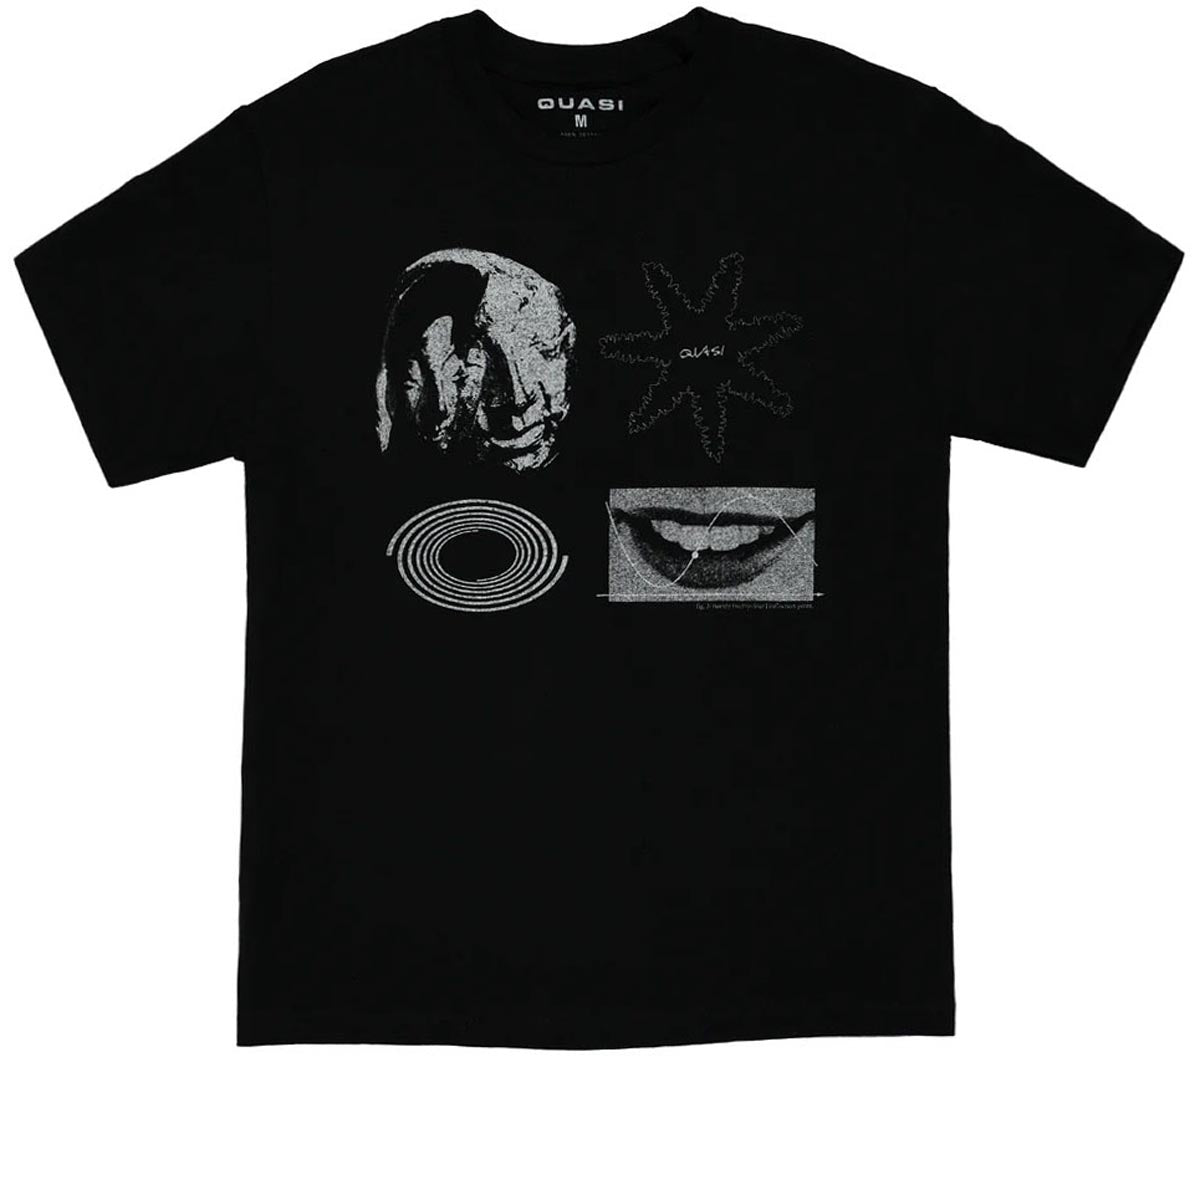 Quasi Point T-Shirt - Black image 1